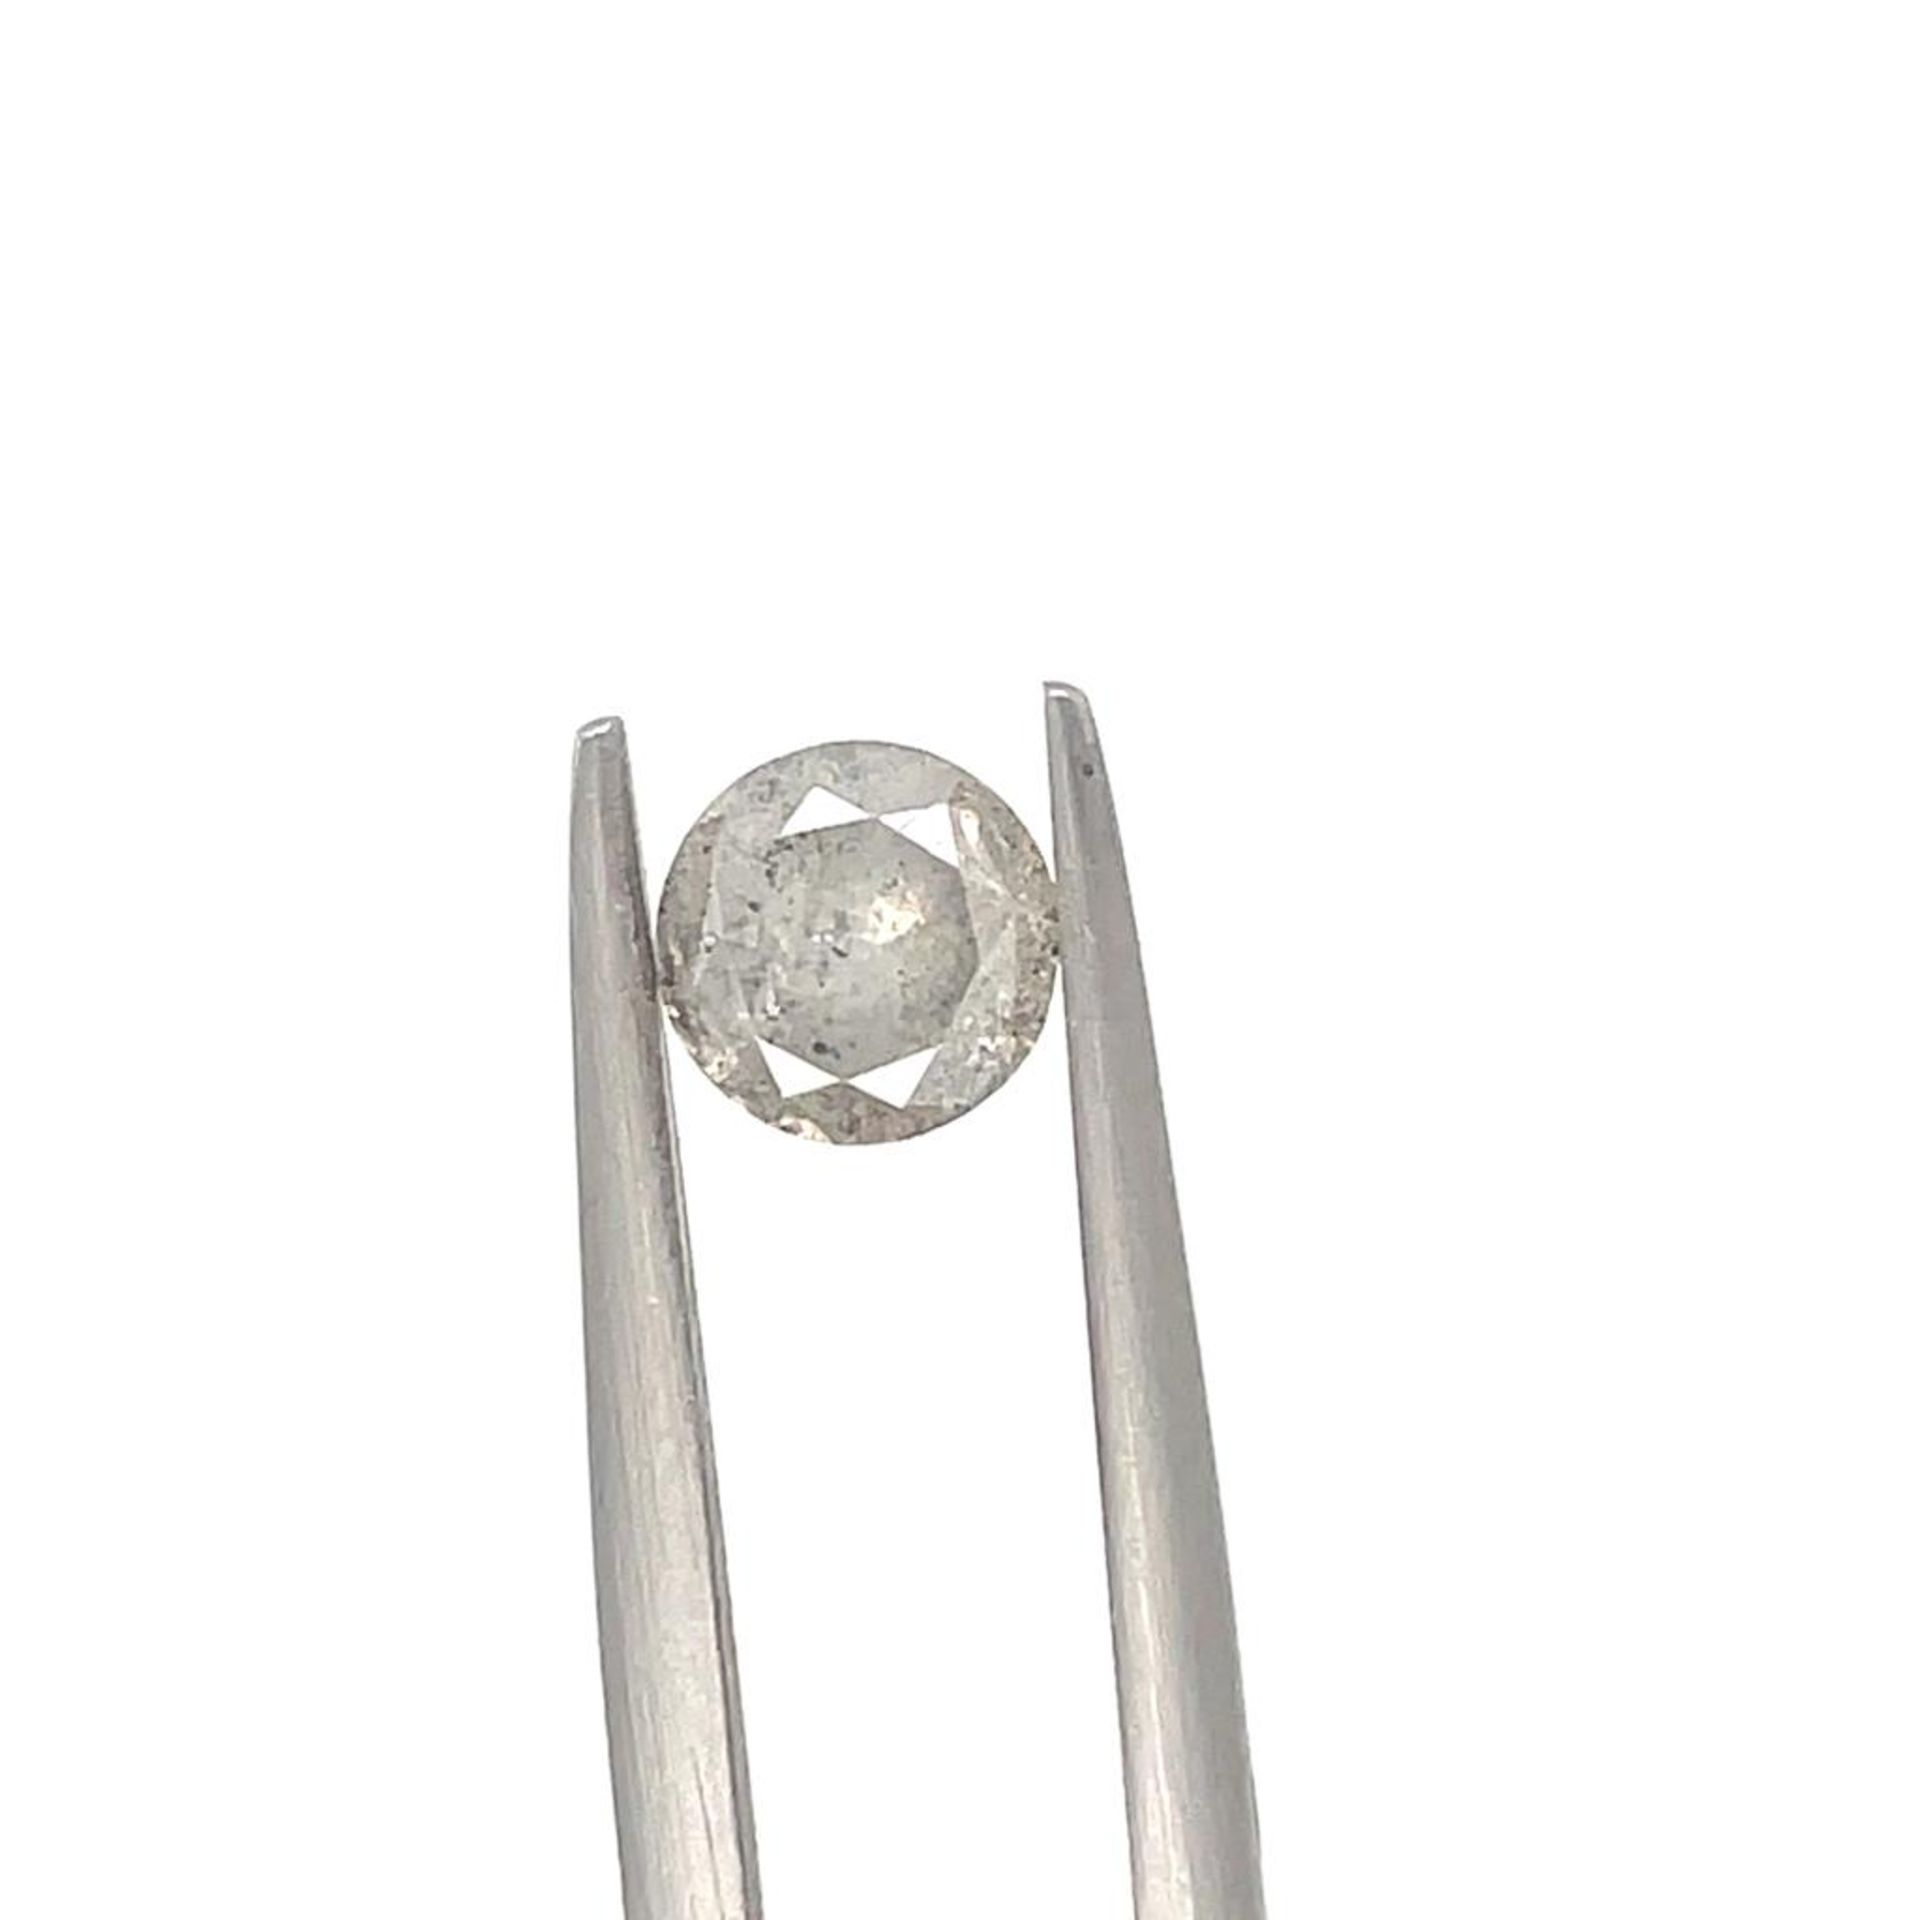 1 DIAMOND 0,95 CT FANCY GRAY - I3 - SHAPE BRILLANT -C20306-10B - Image 3 of 3